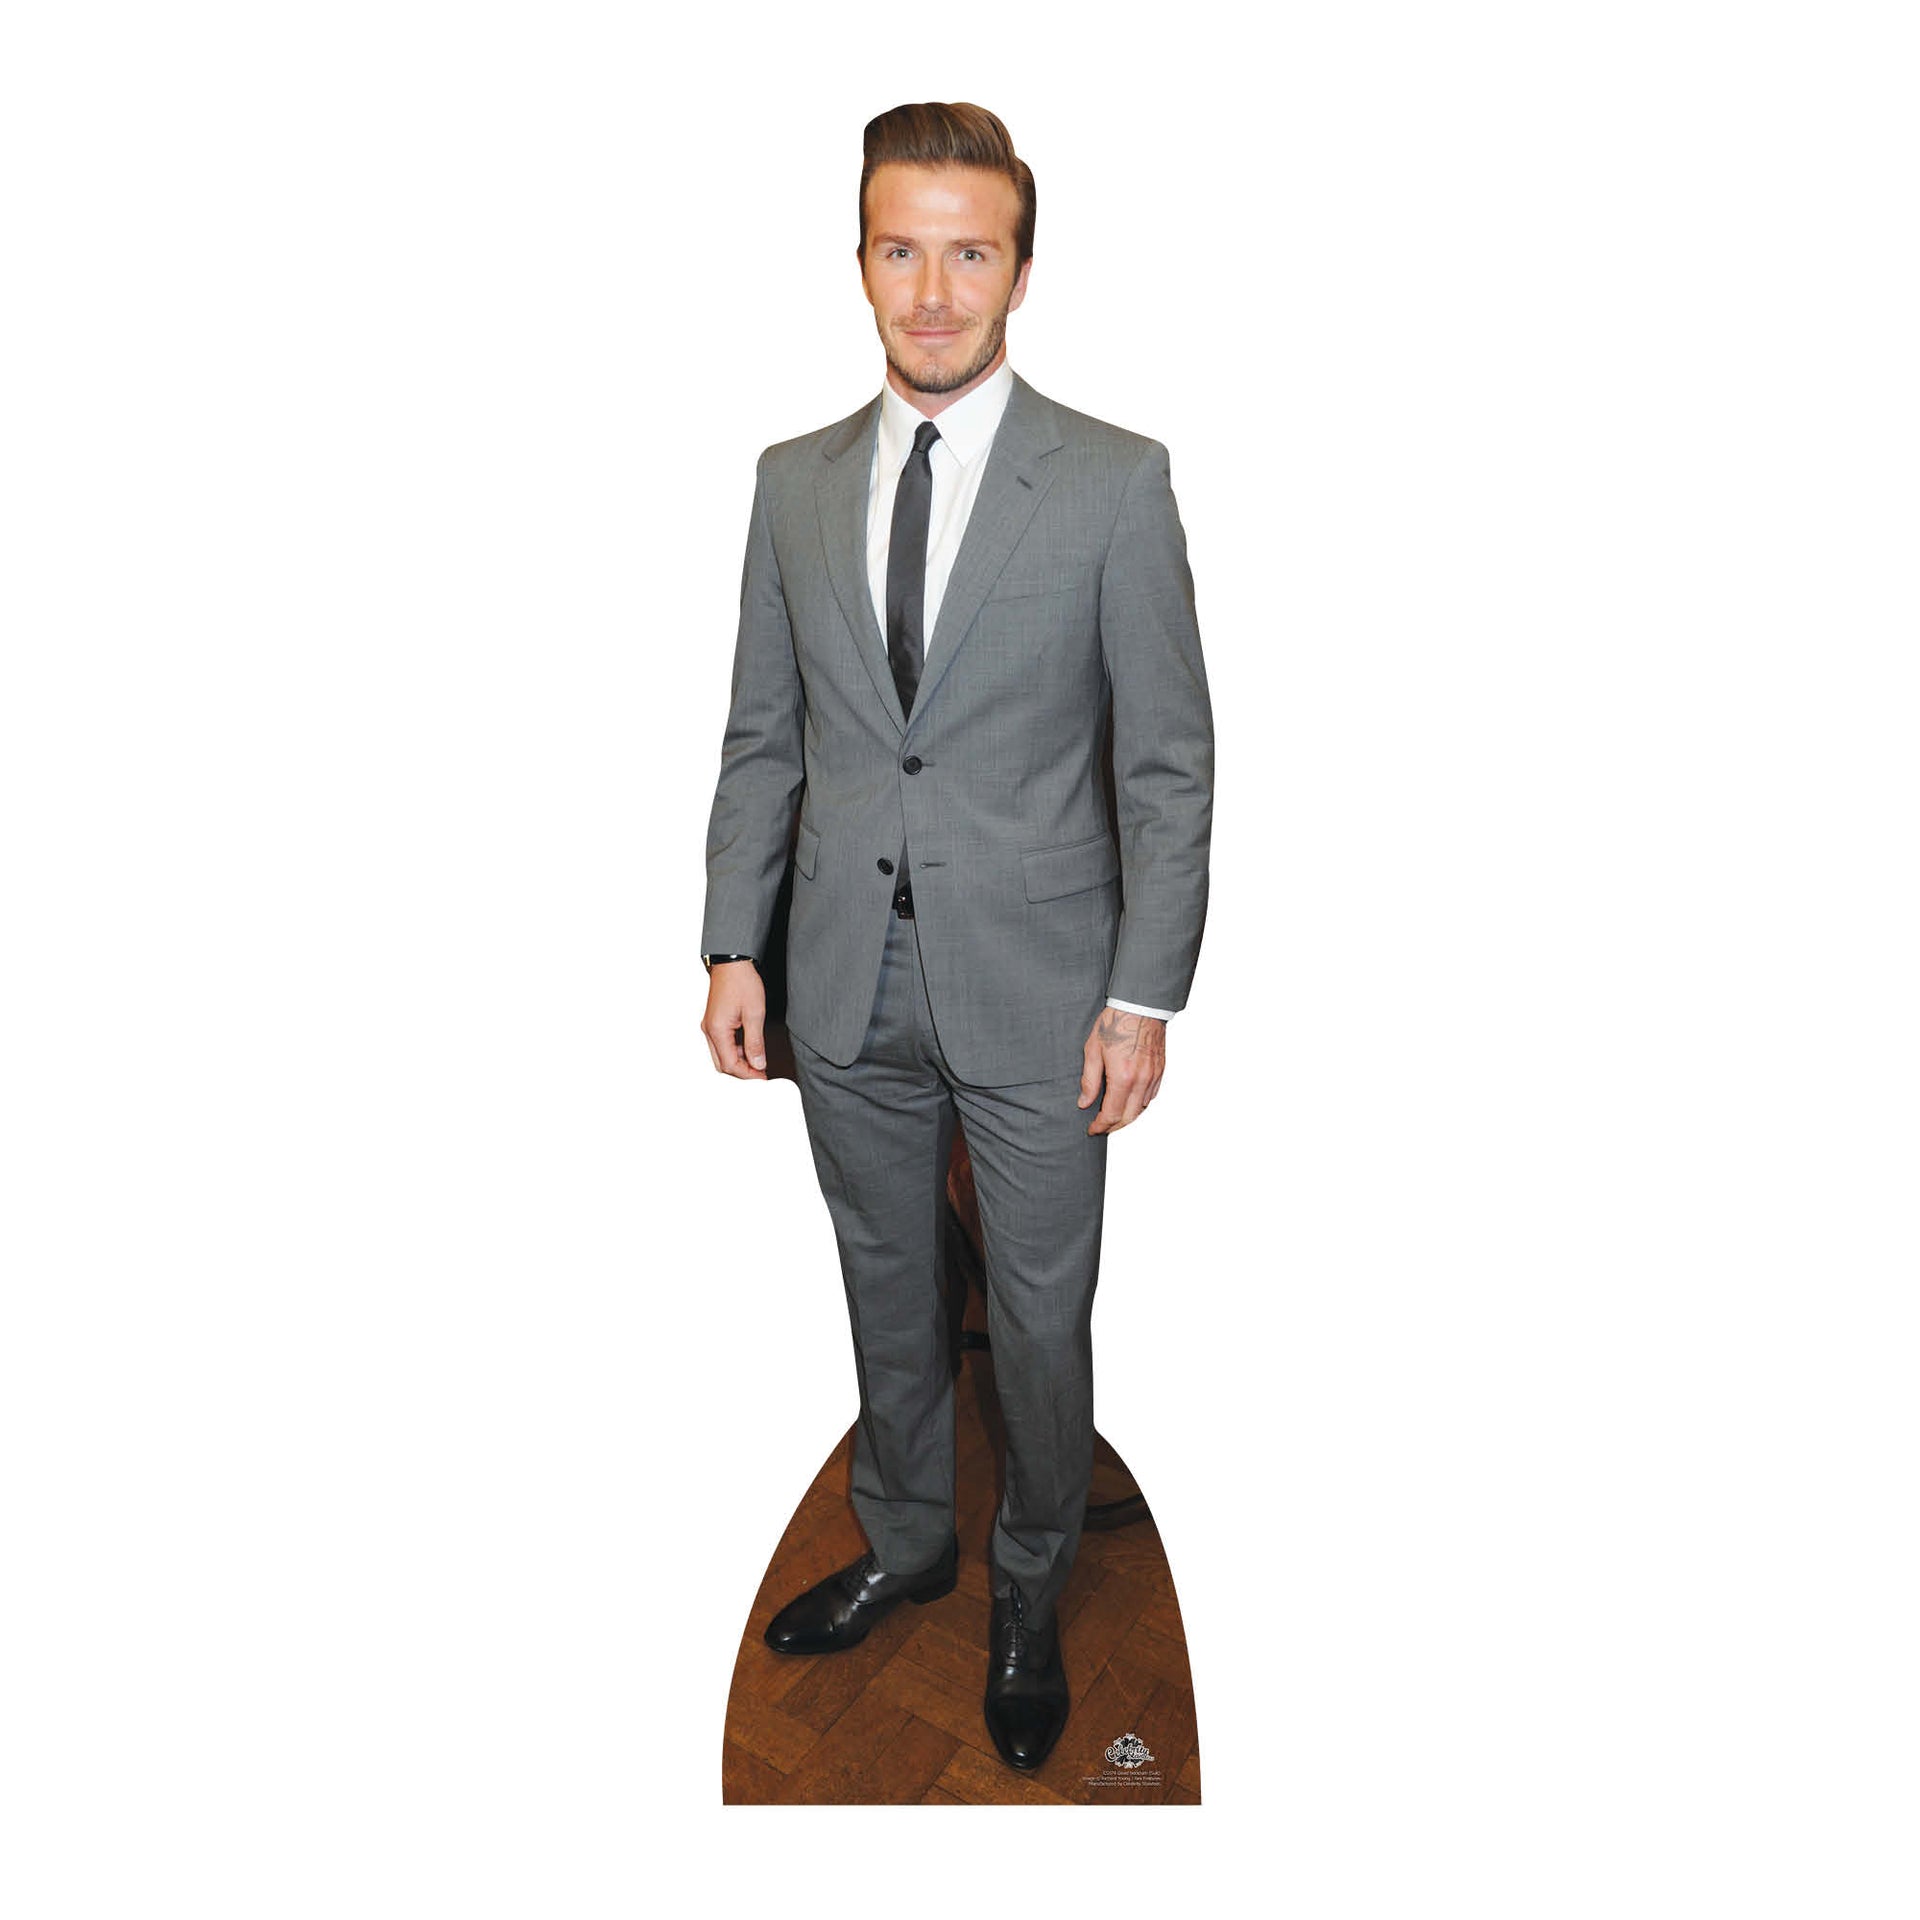 David Beckham Casual Lifesize Cardboard Cutout 181cm - PRE-ORDER